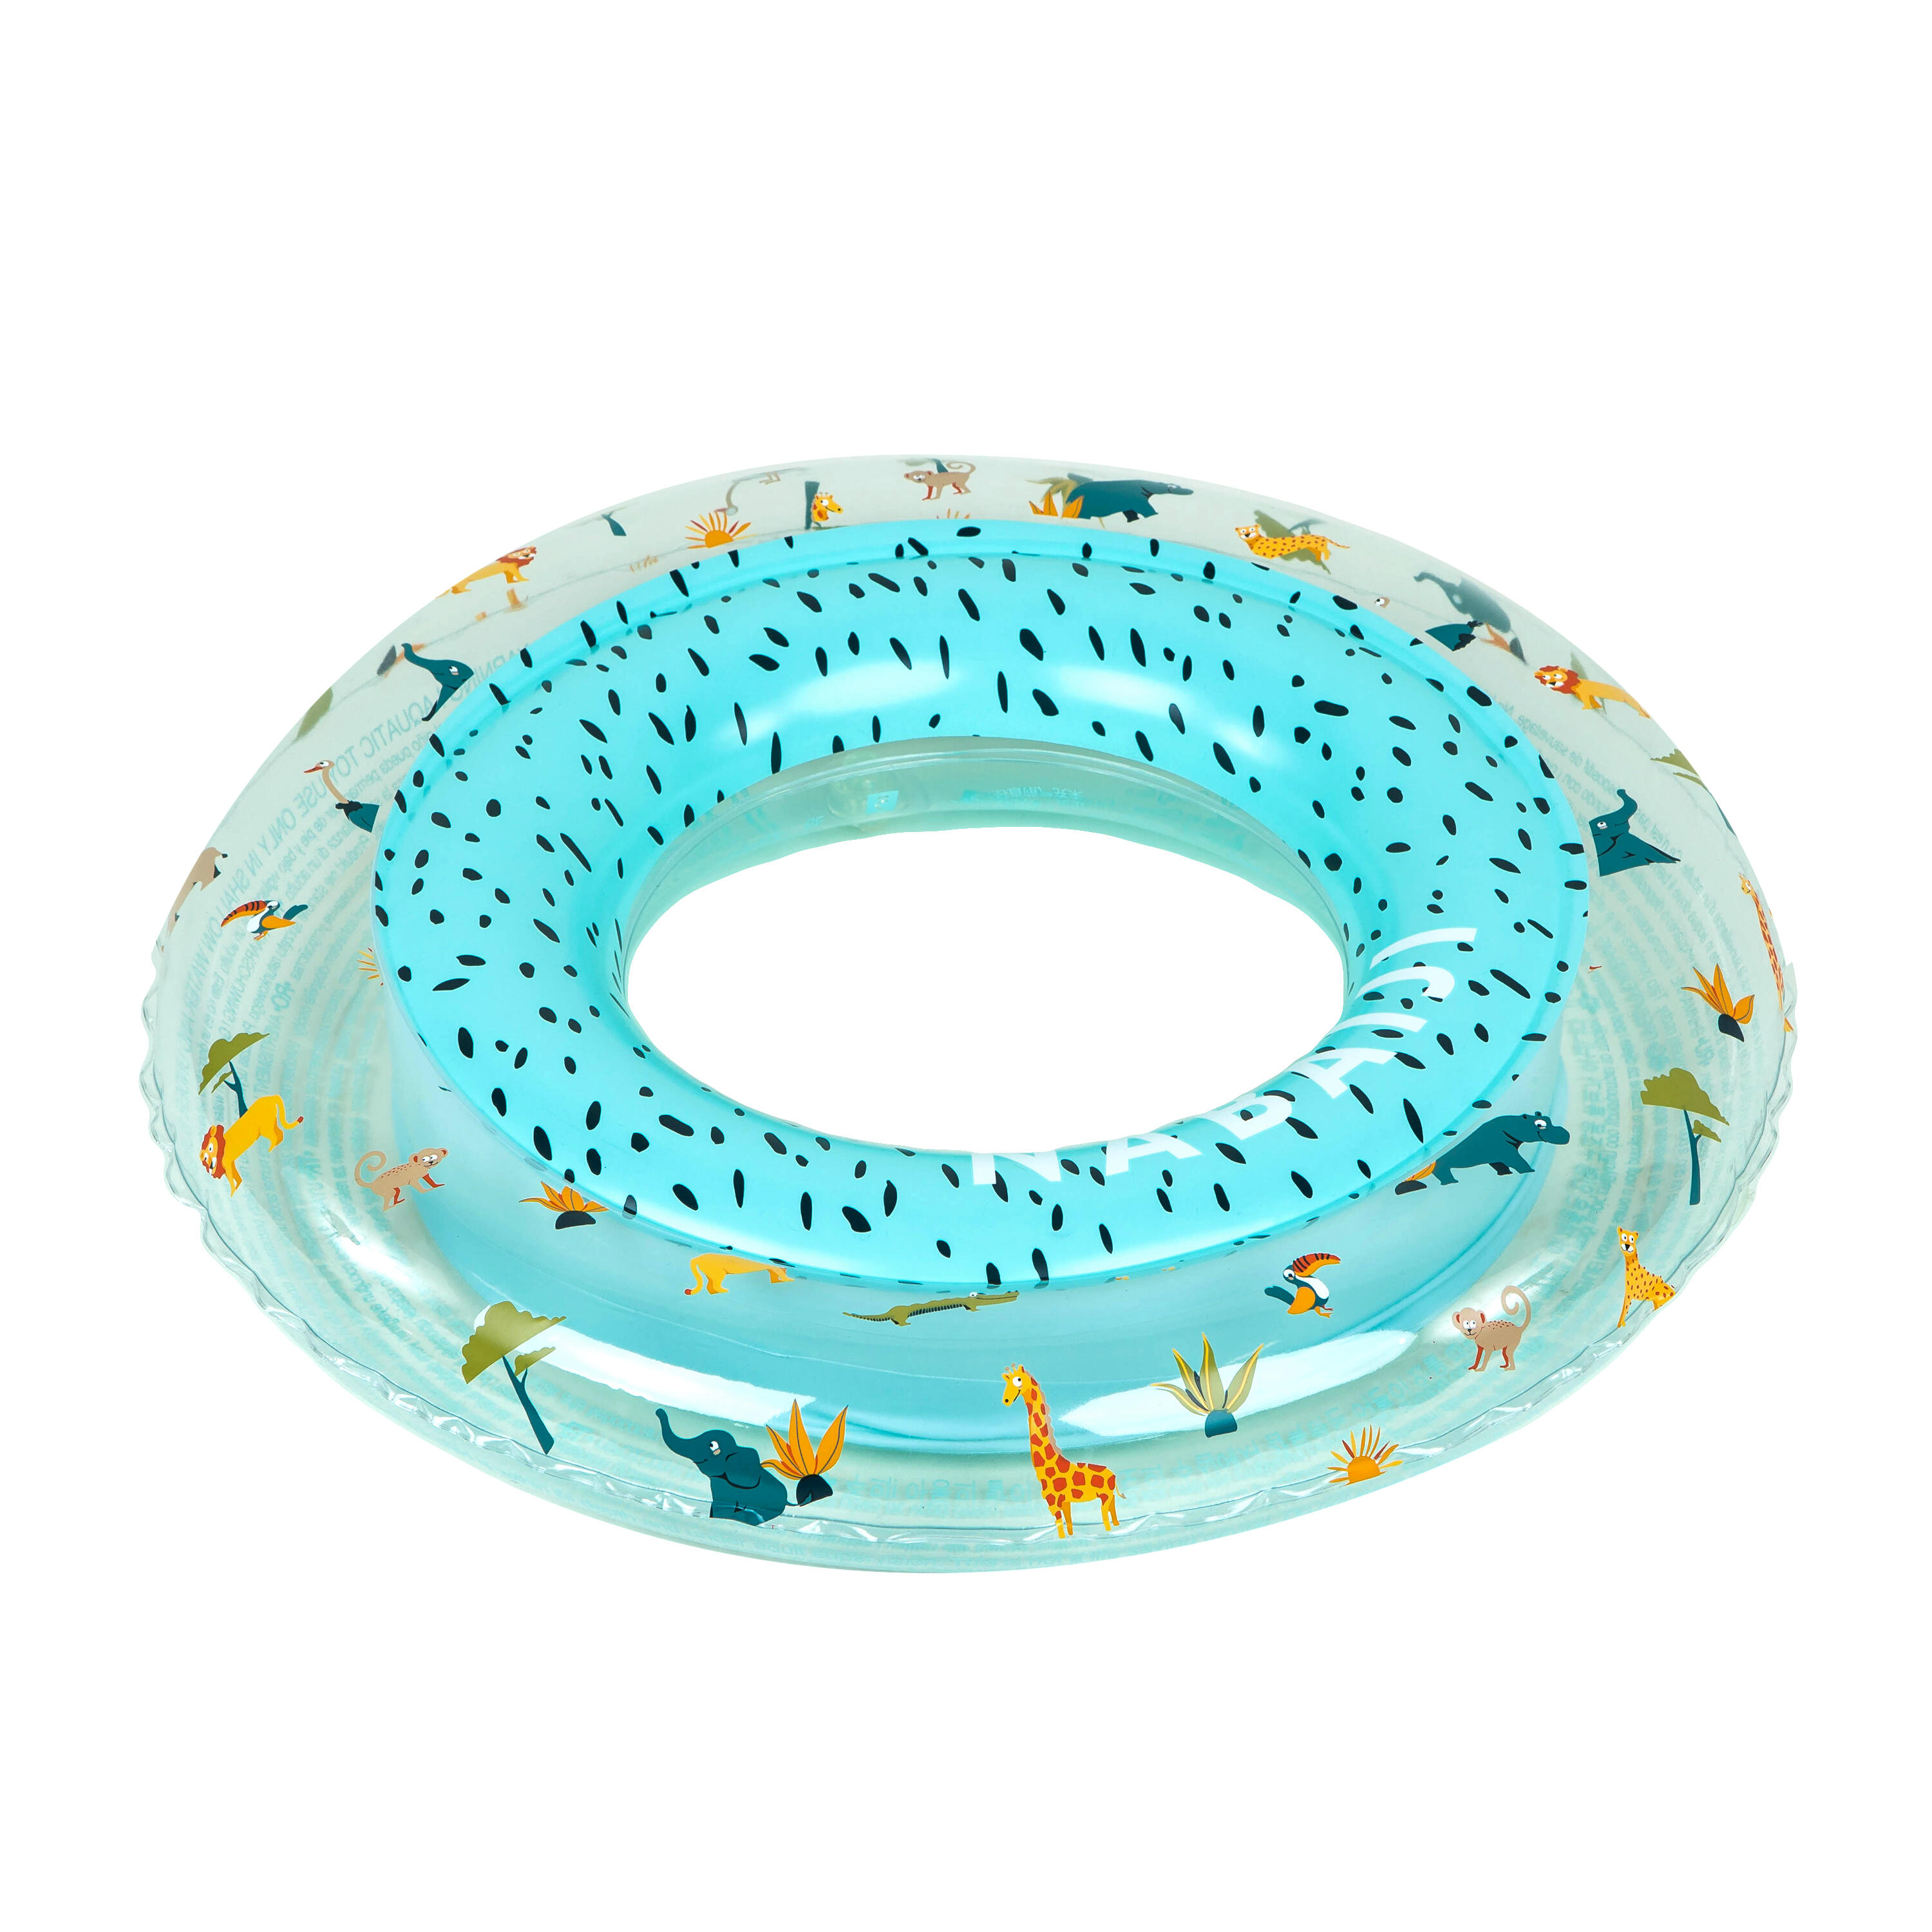 Image of "Kids' Inflatable Swim Pool Ring 3-6 Years - ""Savannah"""